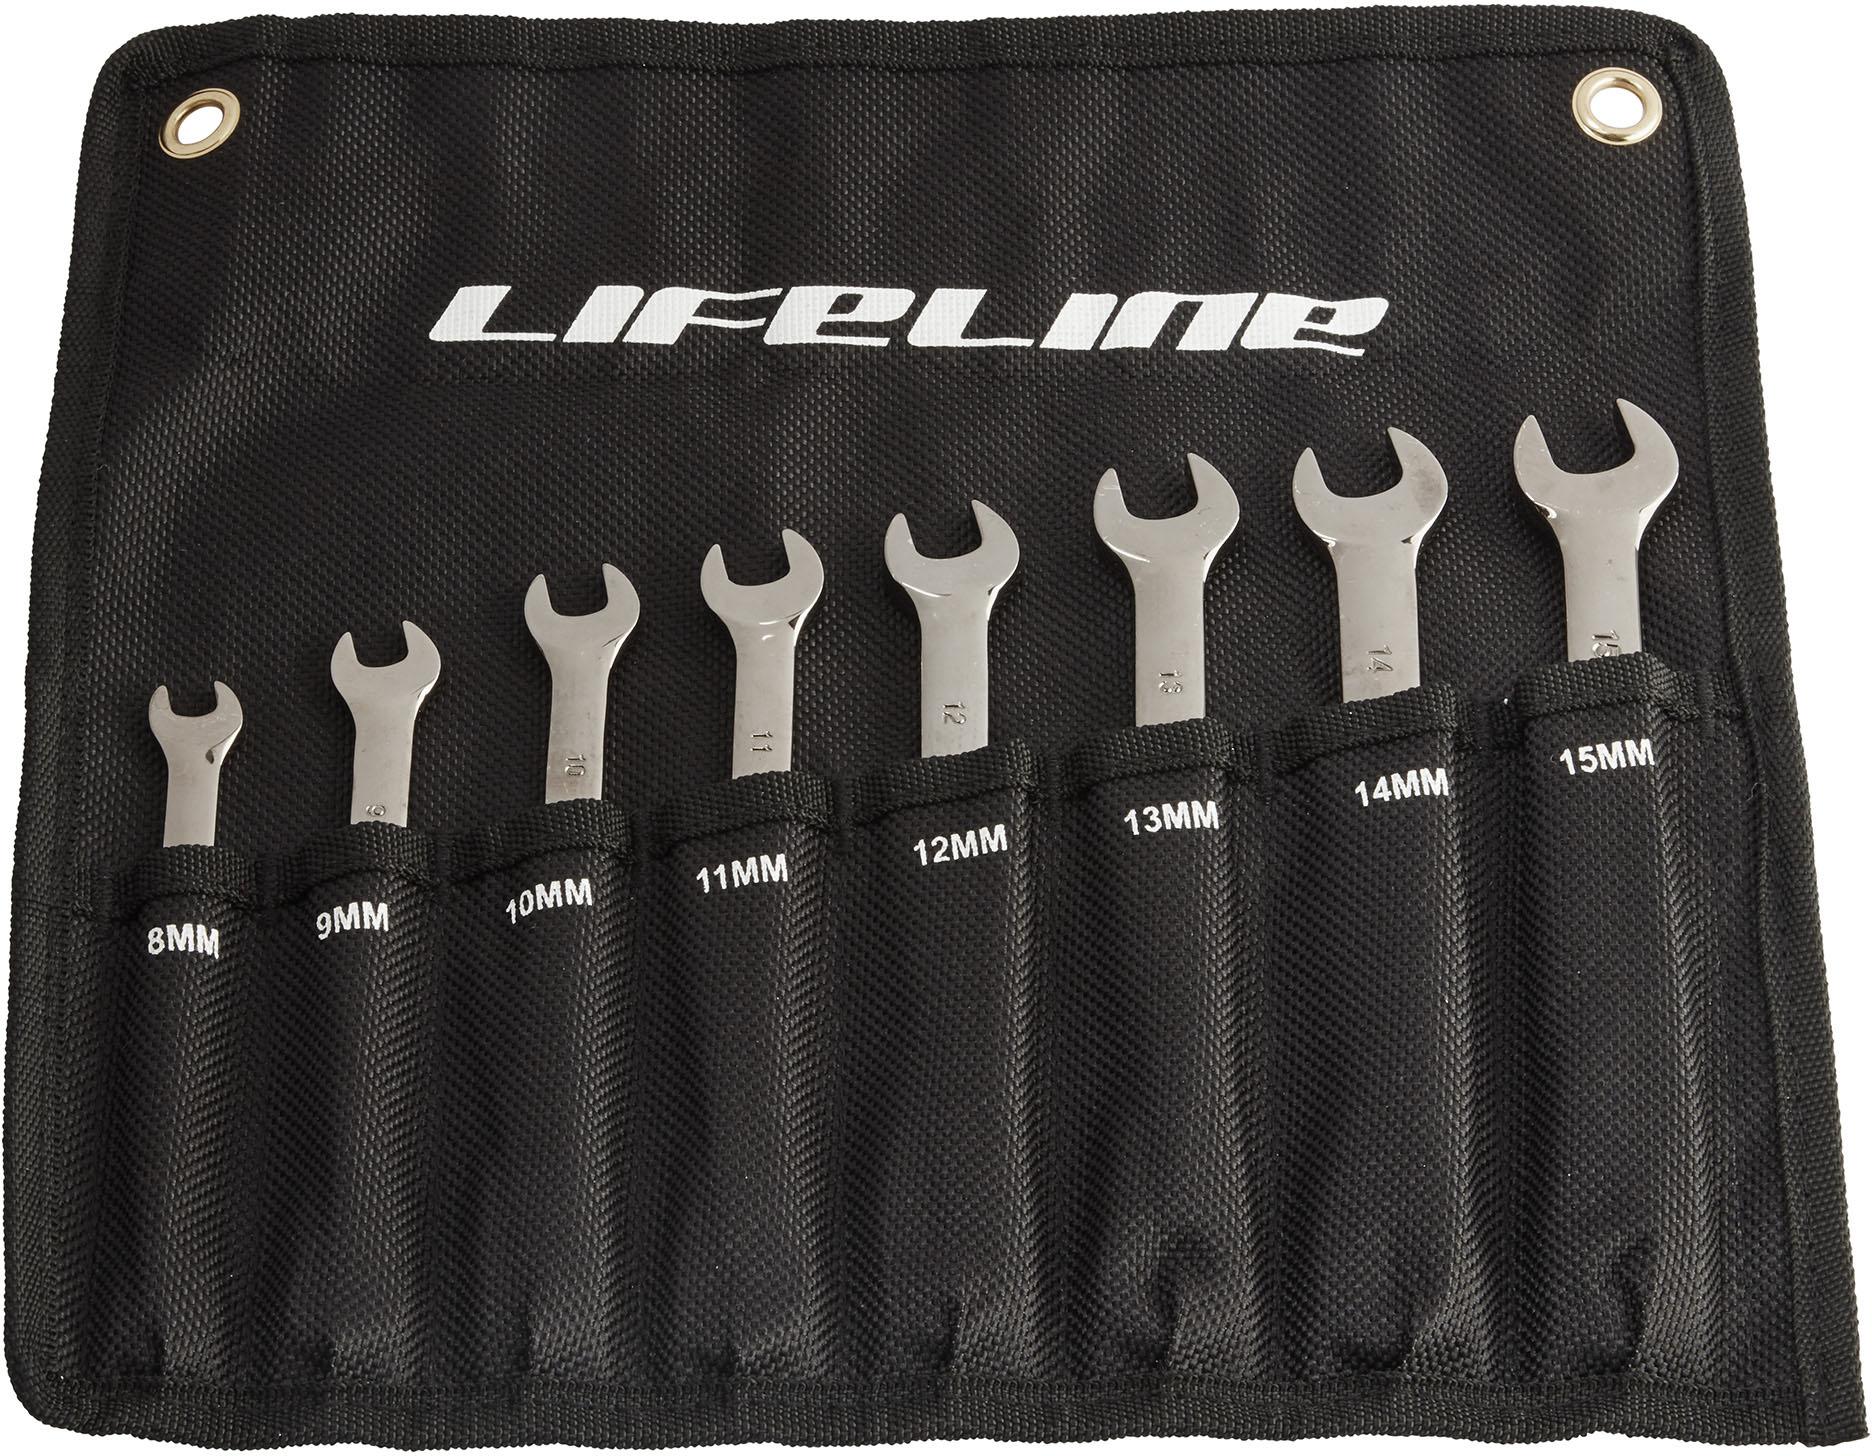 Lifeline Crv Ratchet Wrenches - Black